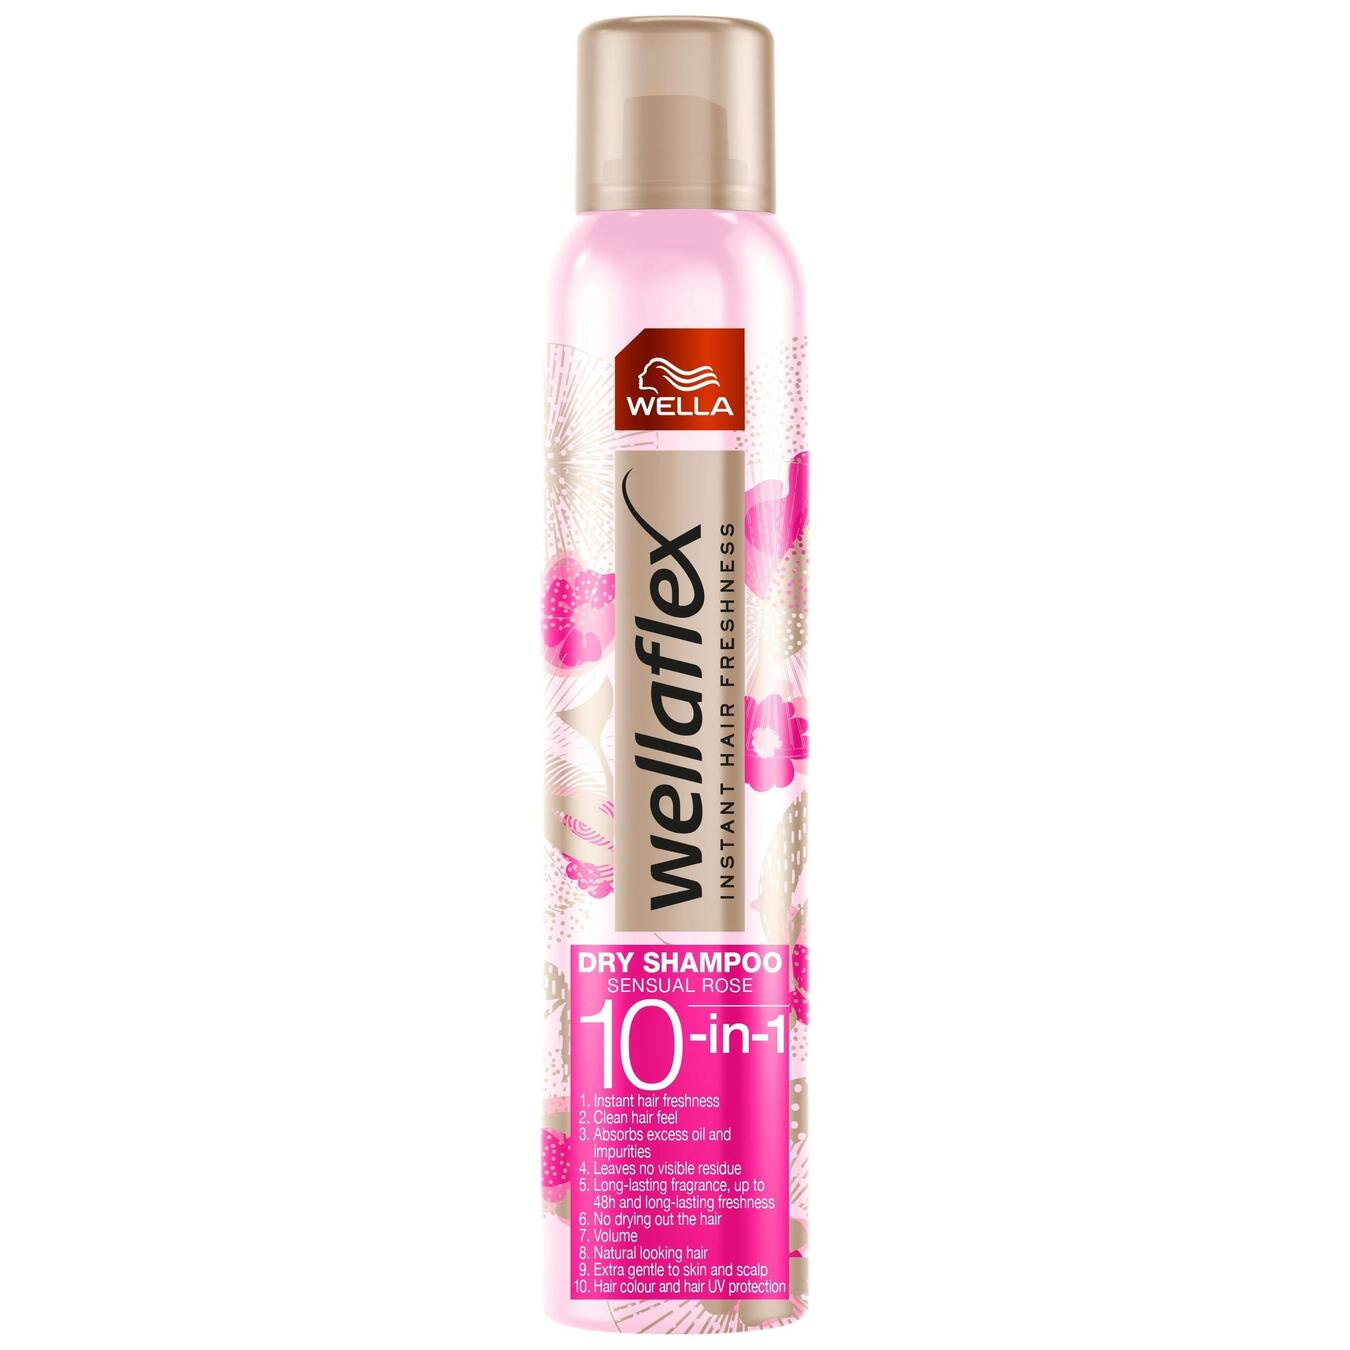 Wellaflex shampoo dry gentle rose with natural tapioca starch 180ml